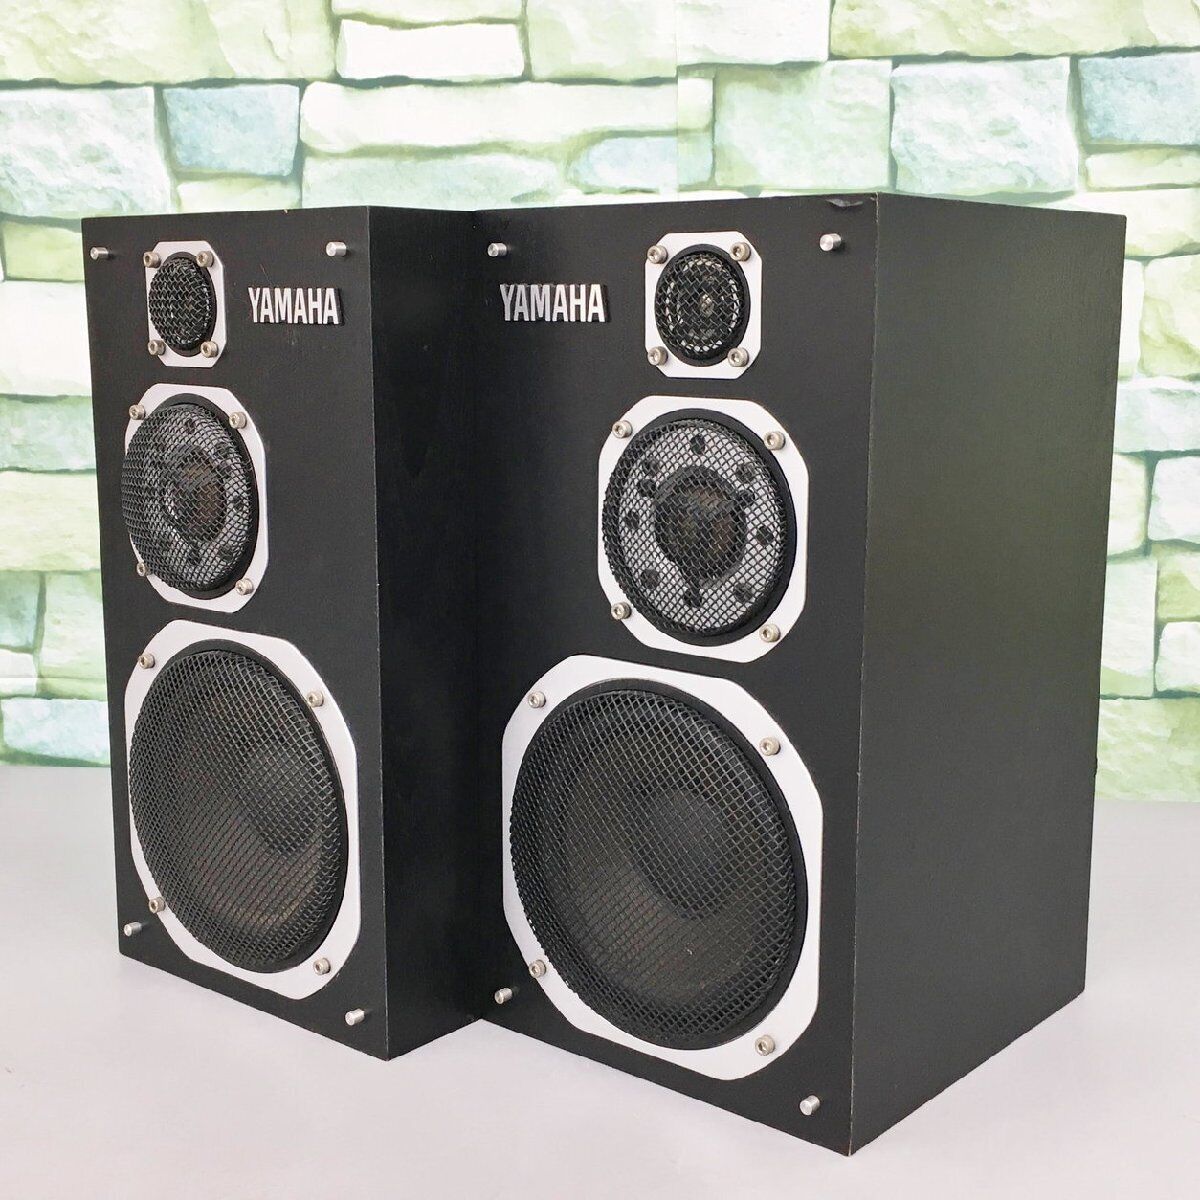 YAMAHA NS-1000MM Speaker Black Pair  (2 unit) sound output confirmed [Excellent]